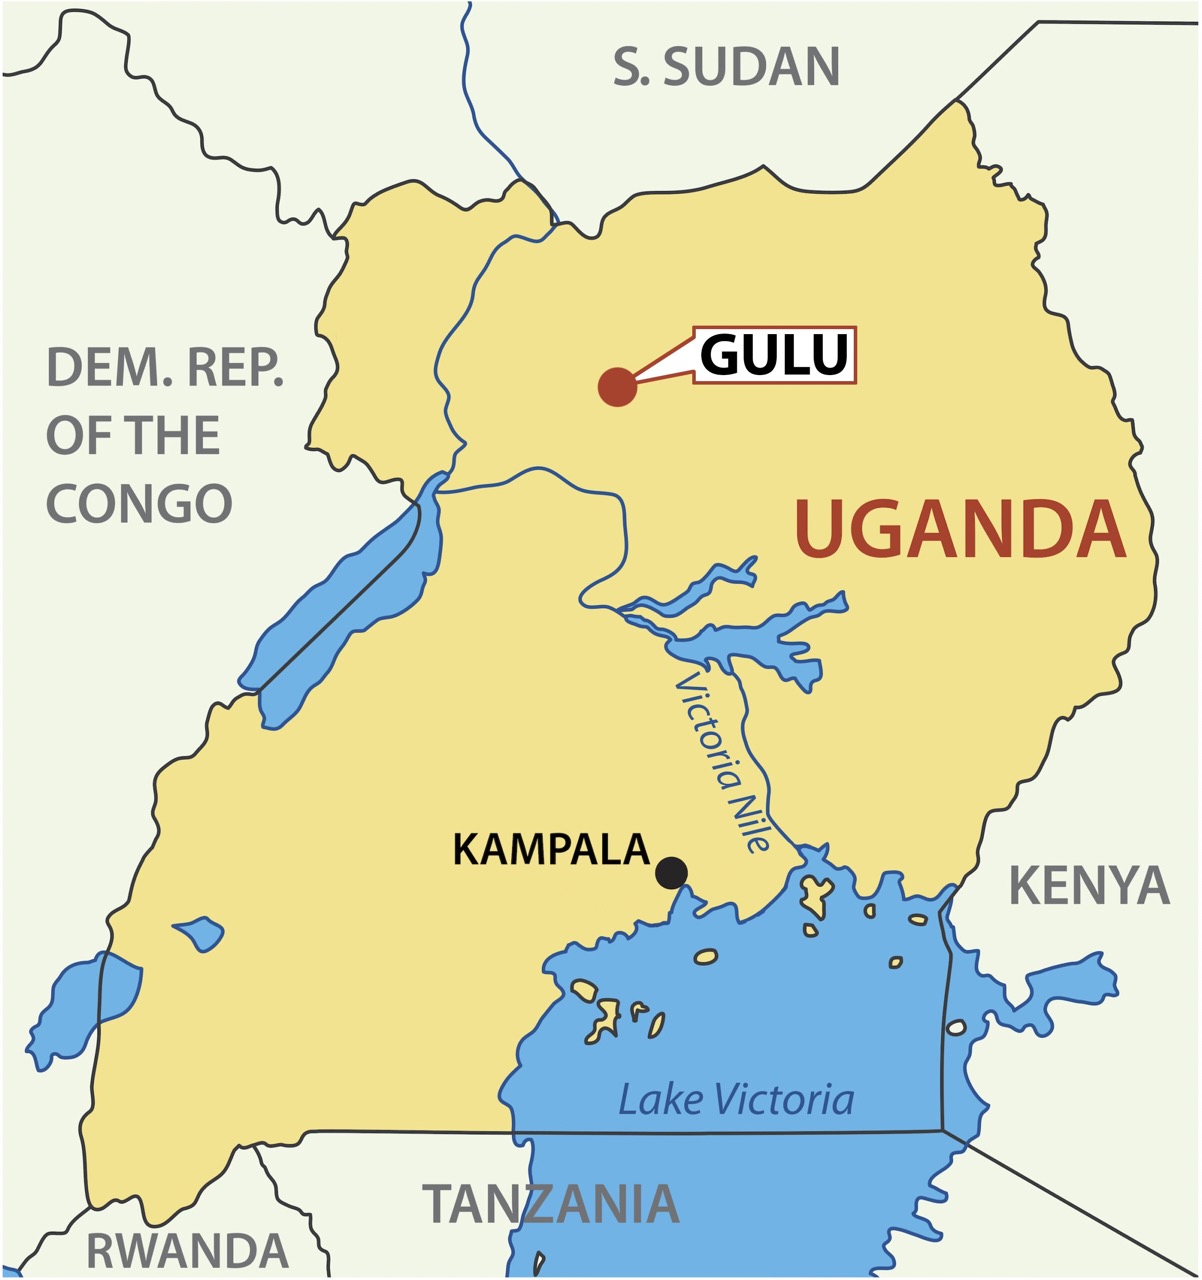 Uganda | Old ways may still threaten new roads - ZAM